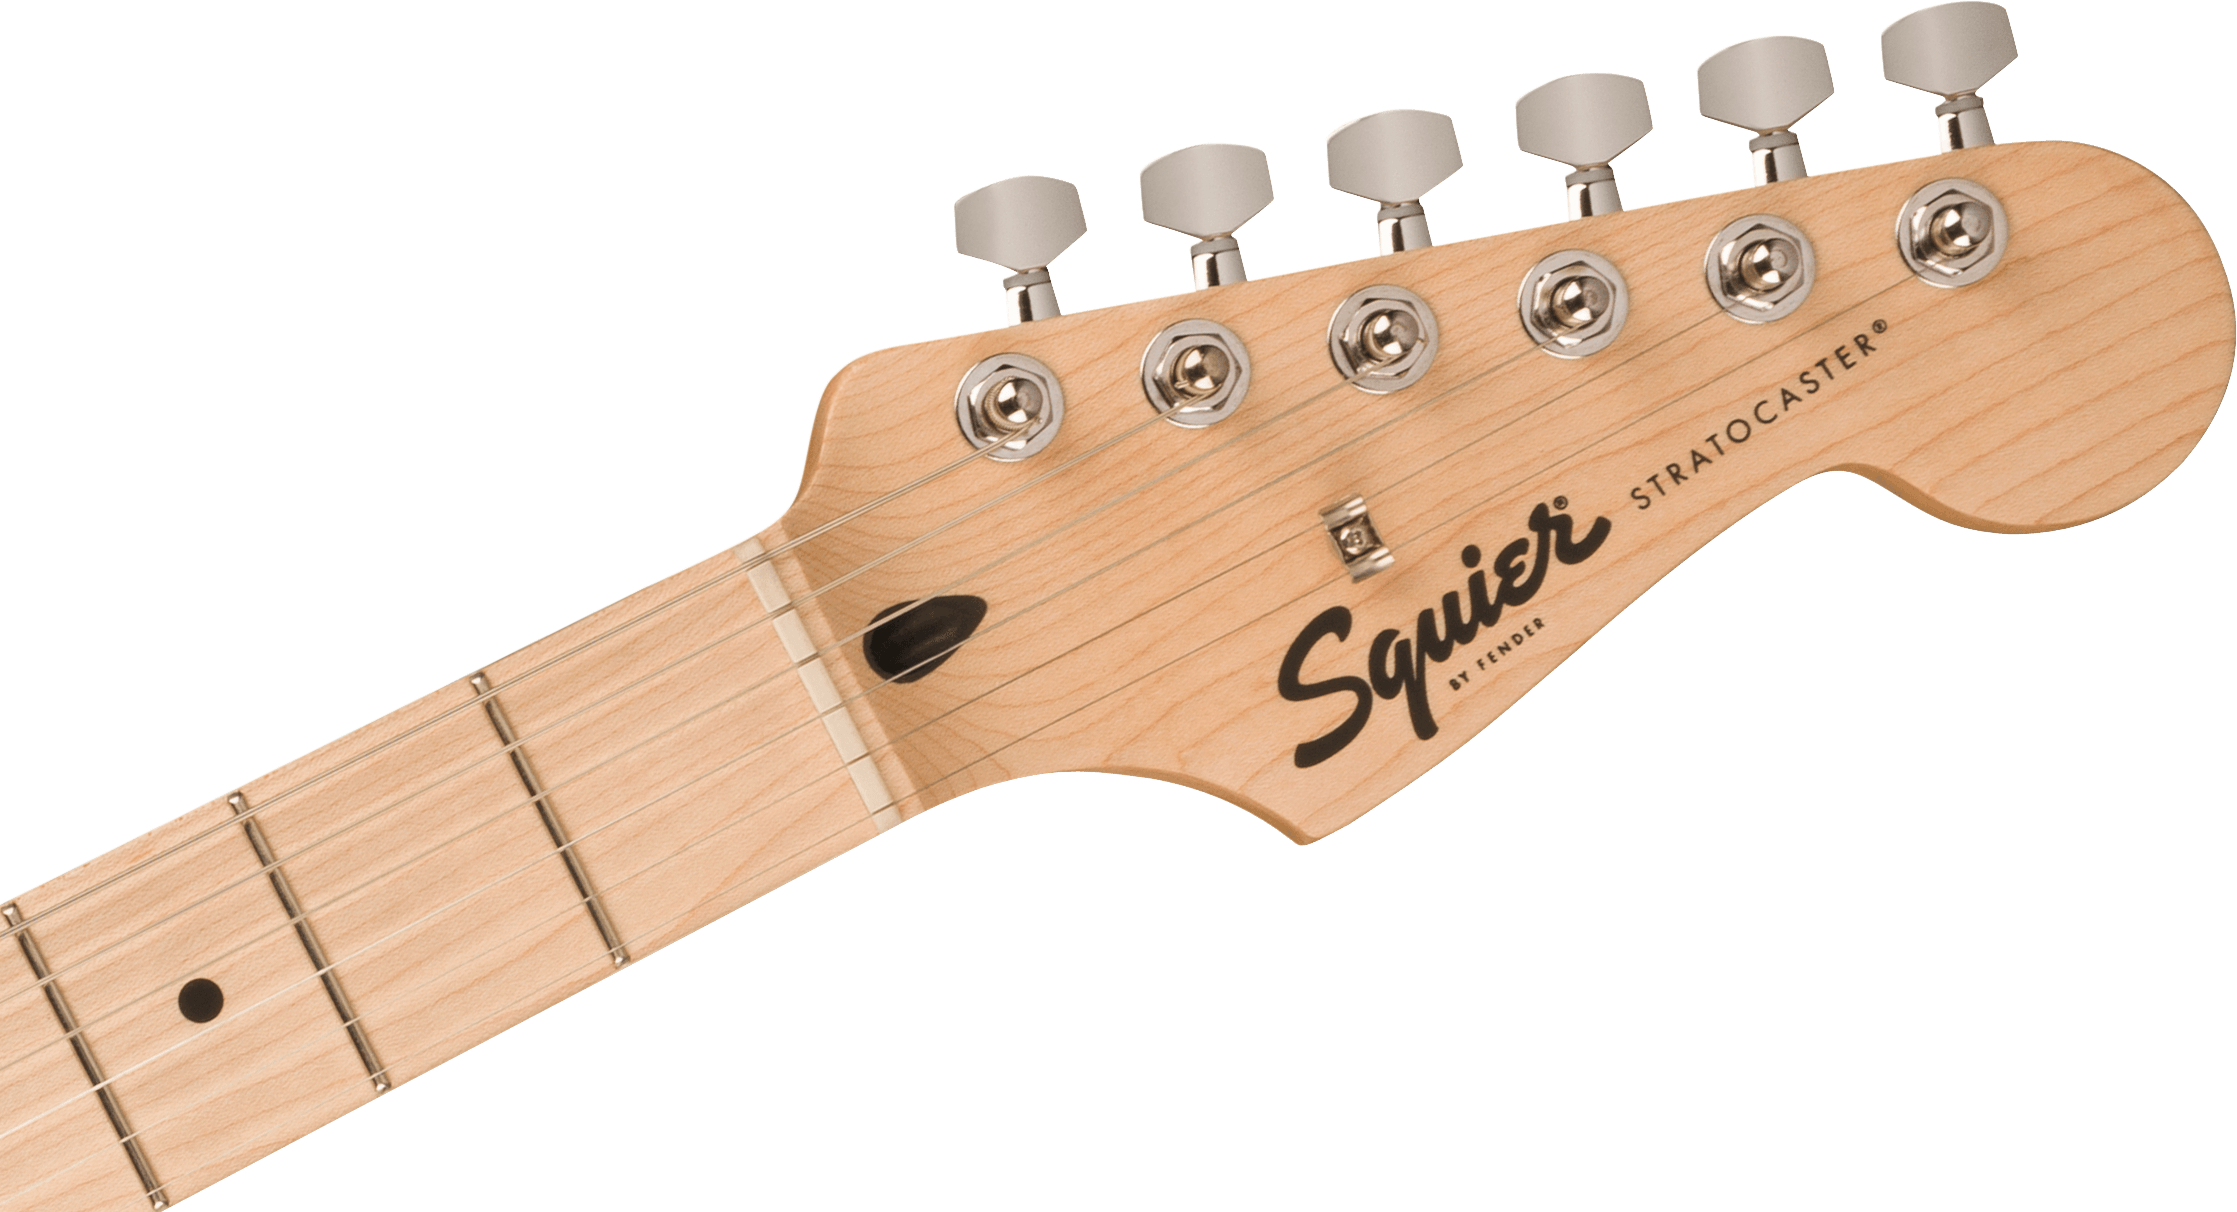 Squier Squier Sonic® Stratocaster® HSS, Maple Fingerboard, Black Pickguard, Black